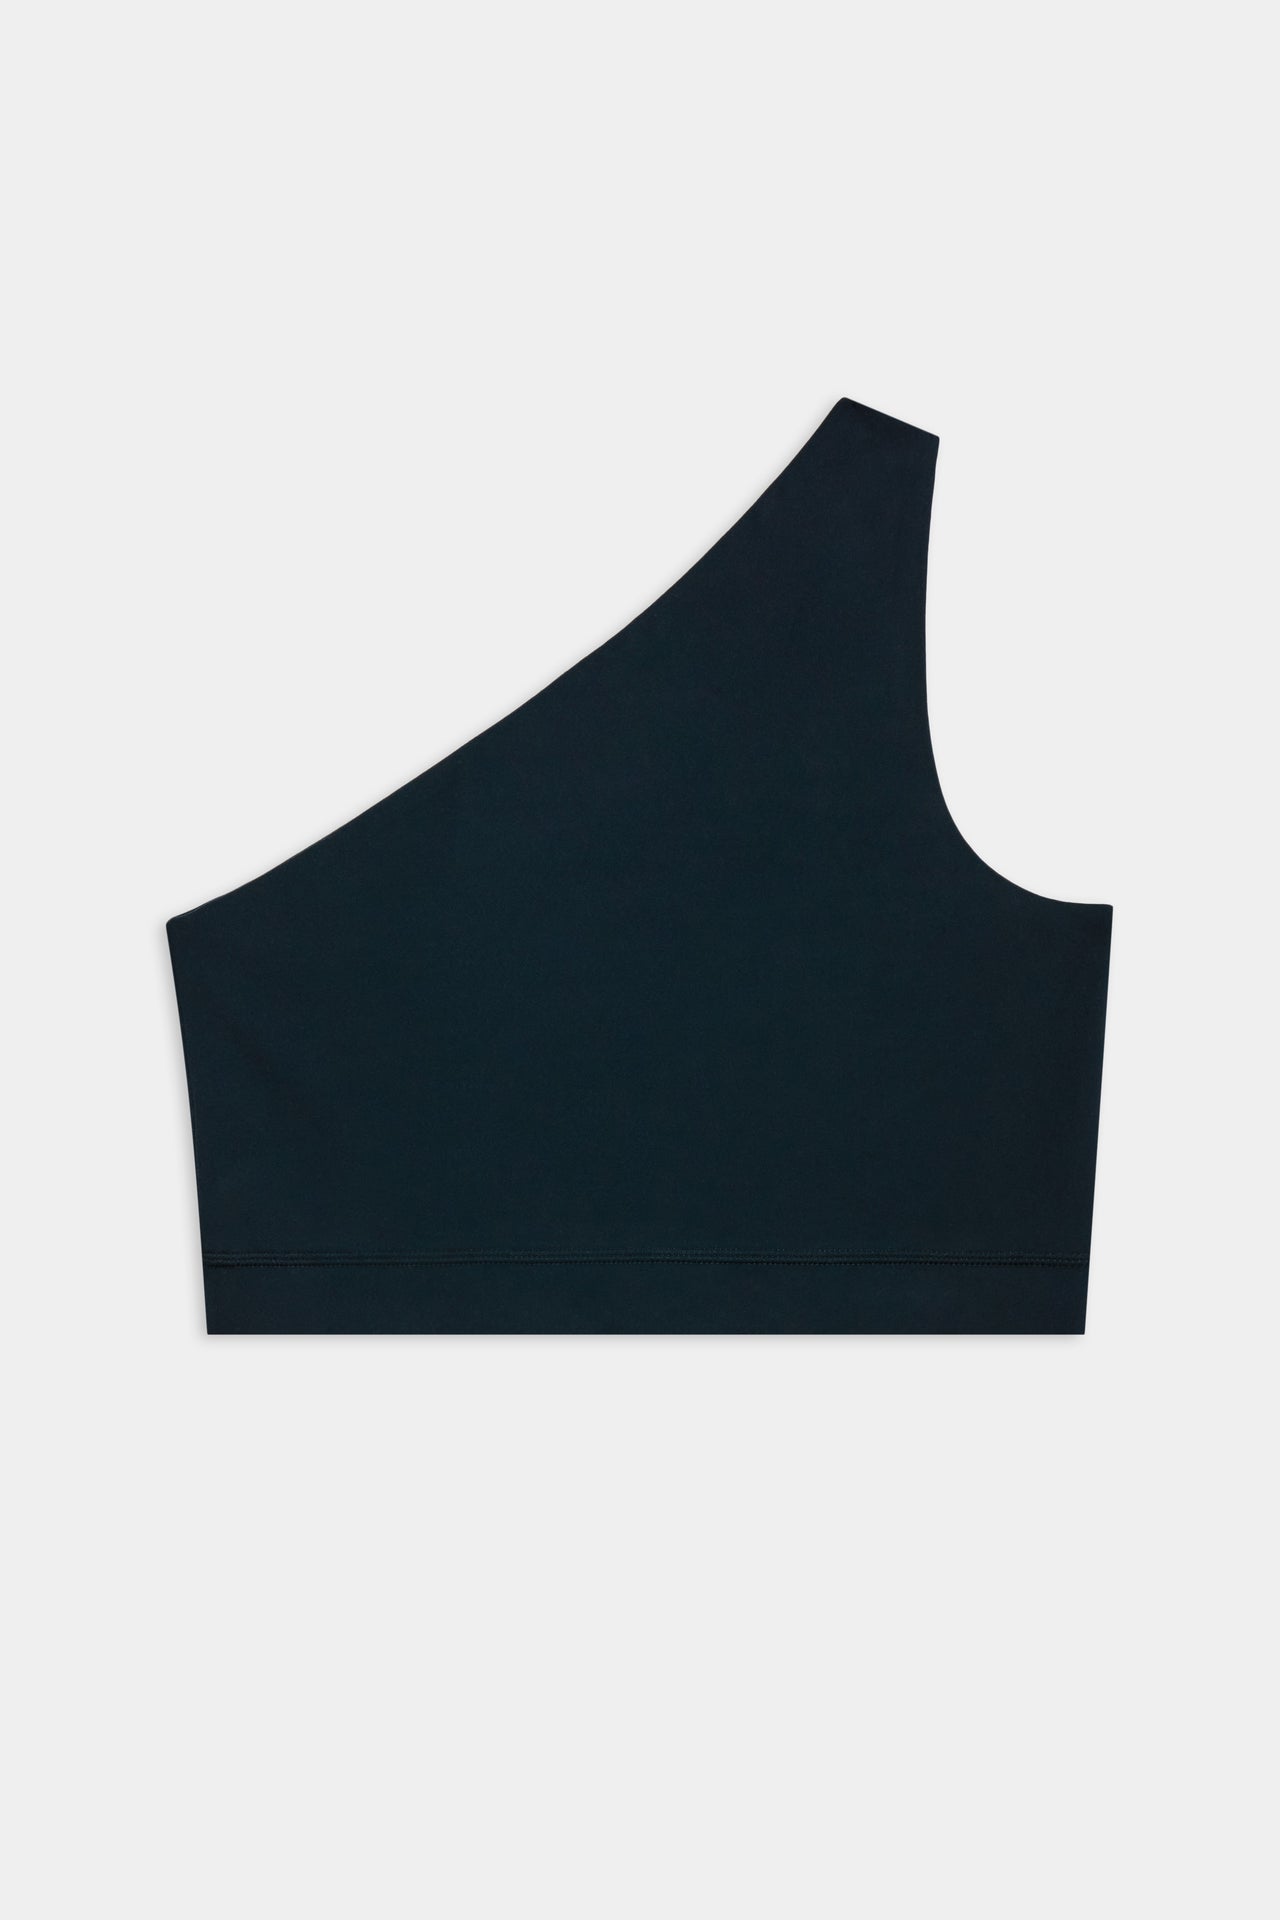 Flat view of a black one shoulder bra 